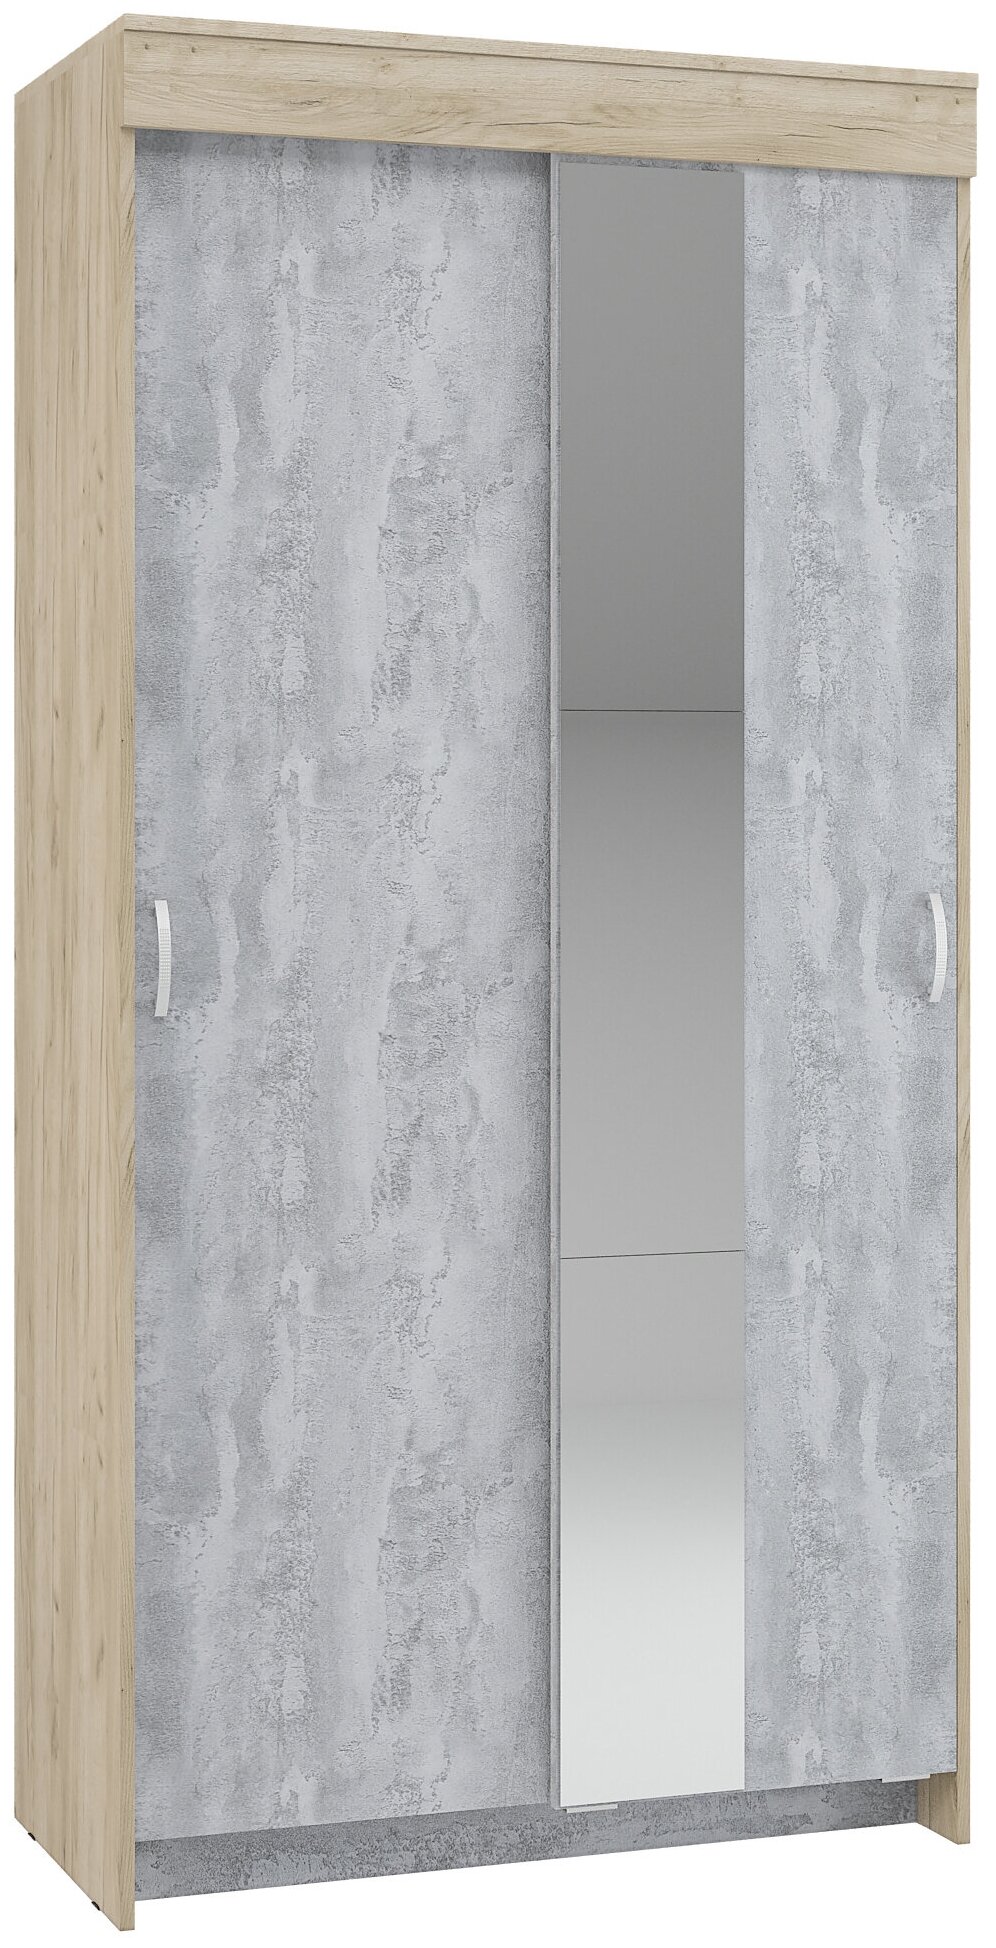 1 шт шкаф-купе Бассо 1,0м дуб крафт серый/бетонный камень + 1 шт Зеркало для ШК Бассо 1,0м